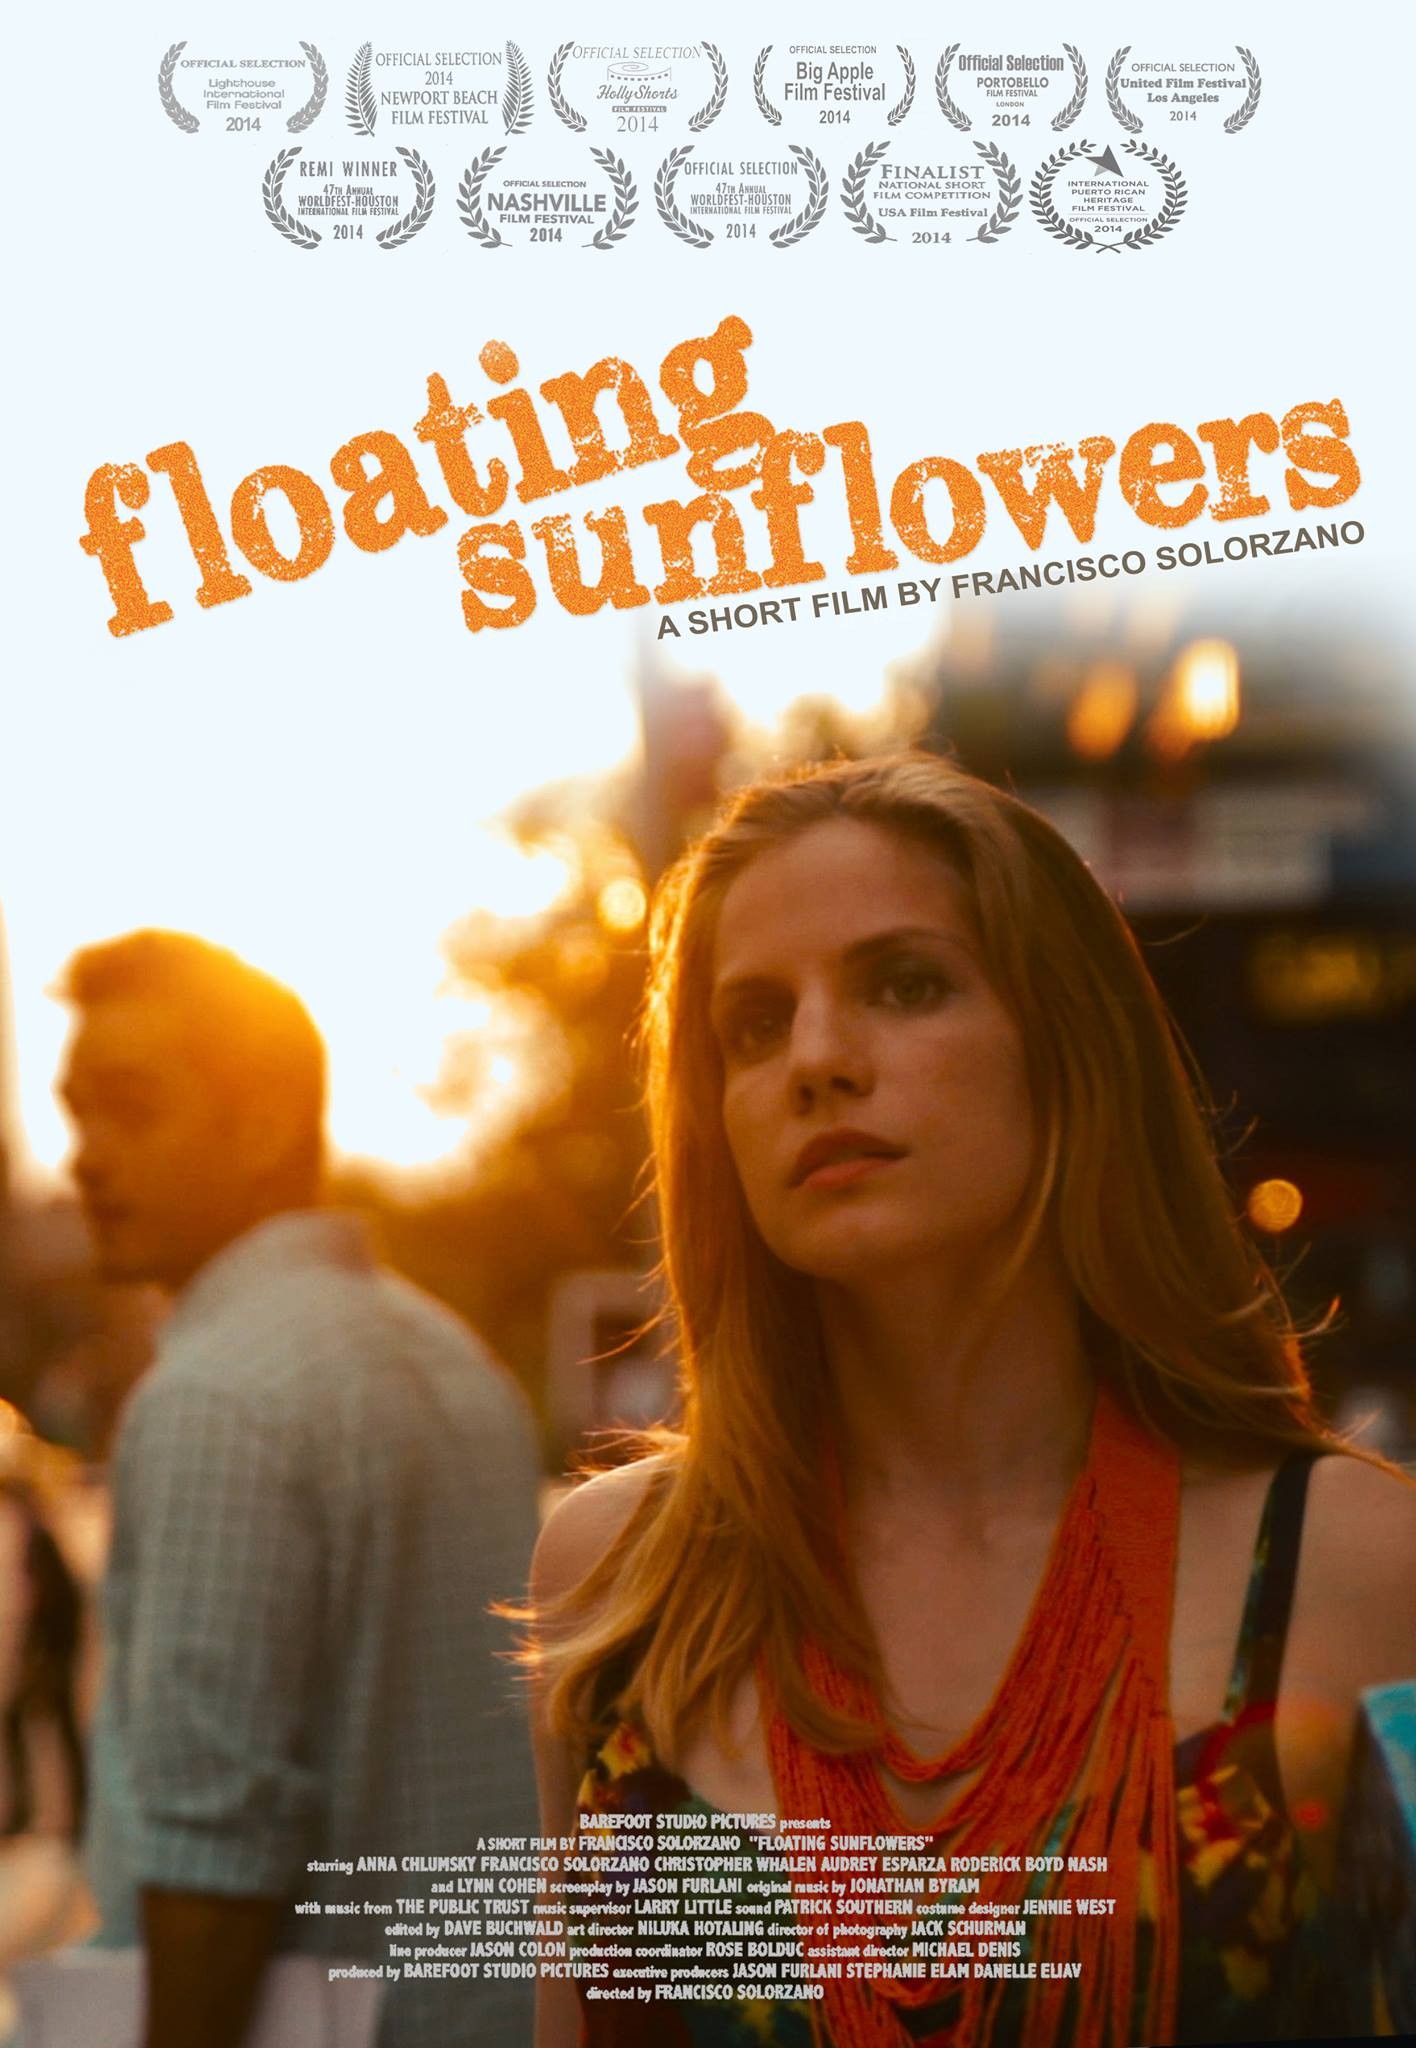 Mega Sized Movie Poster Image for Floating Sunflowers